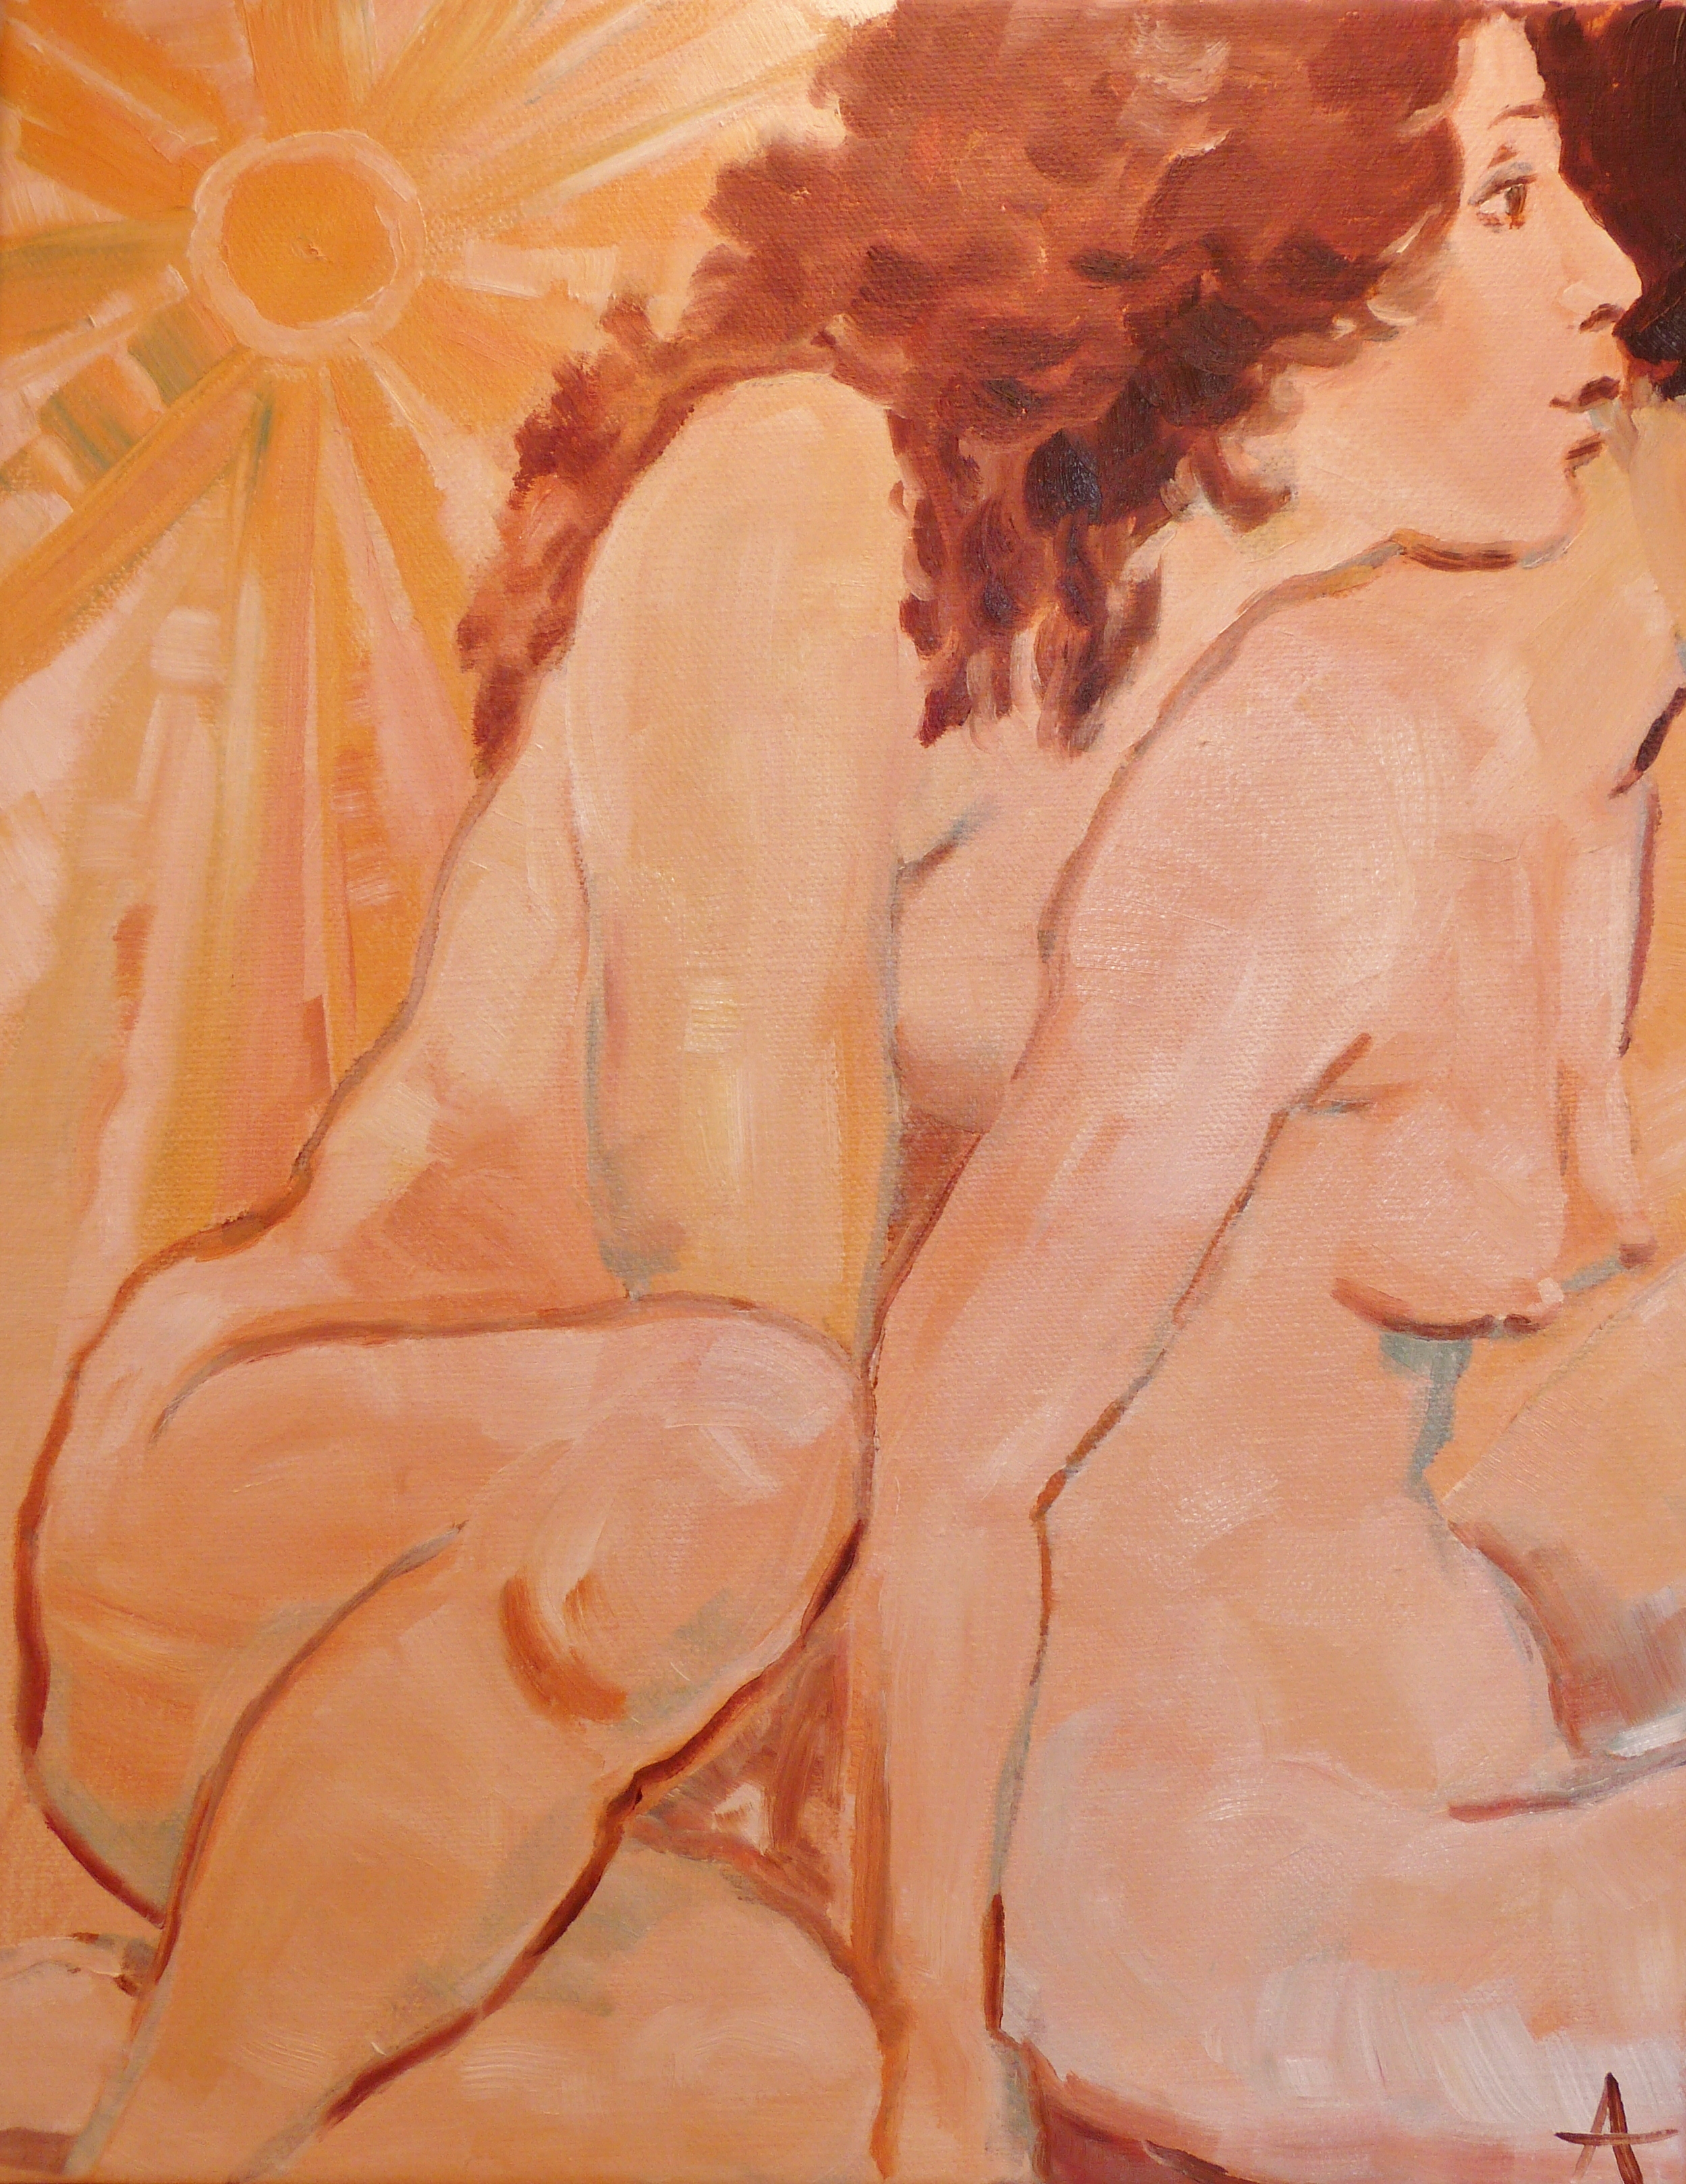 SOLD, Women, Copyright 2012 Hirschten, Oil on Canvas, 11" x 14"